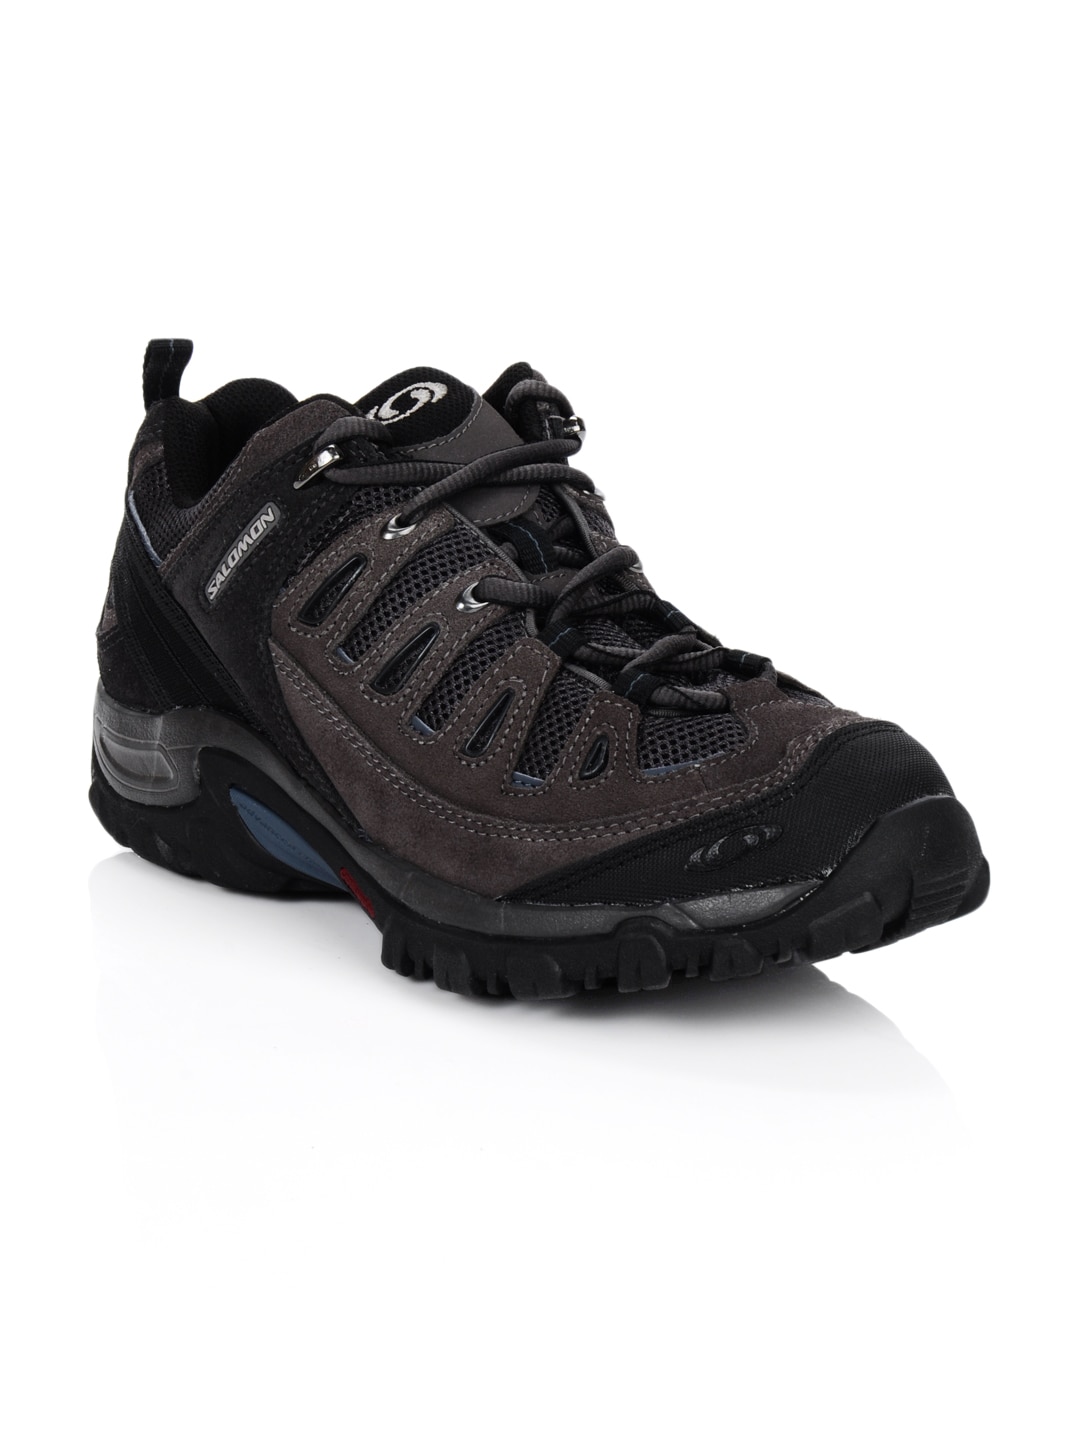 Salomon Men Exit 2 Aero Black Sports Shoes